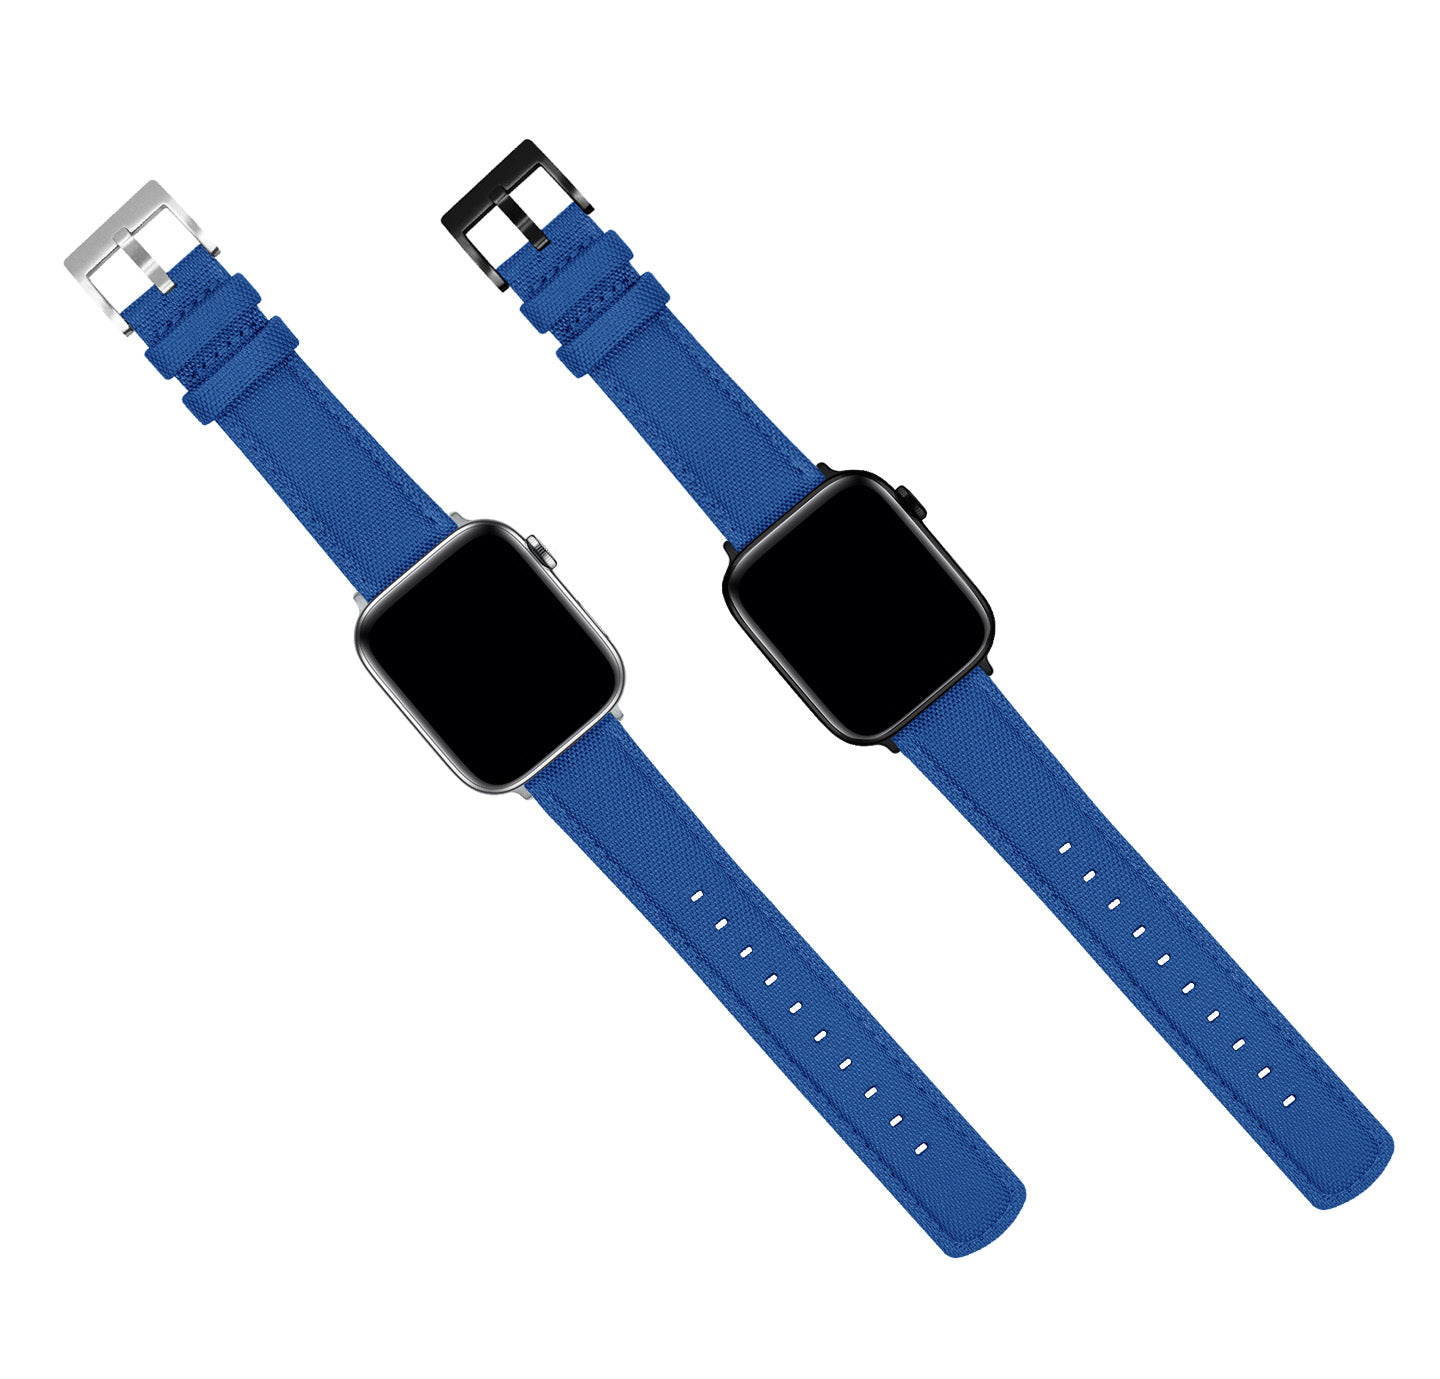 Apple Watch | Royal Blue Sailcloth - Barton Watch Bands